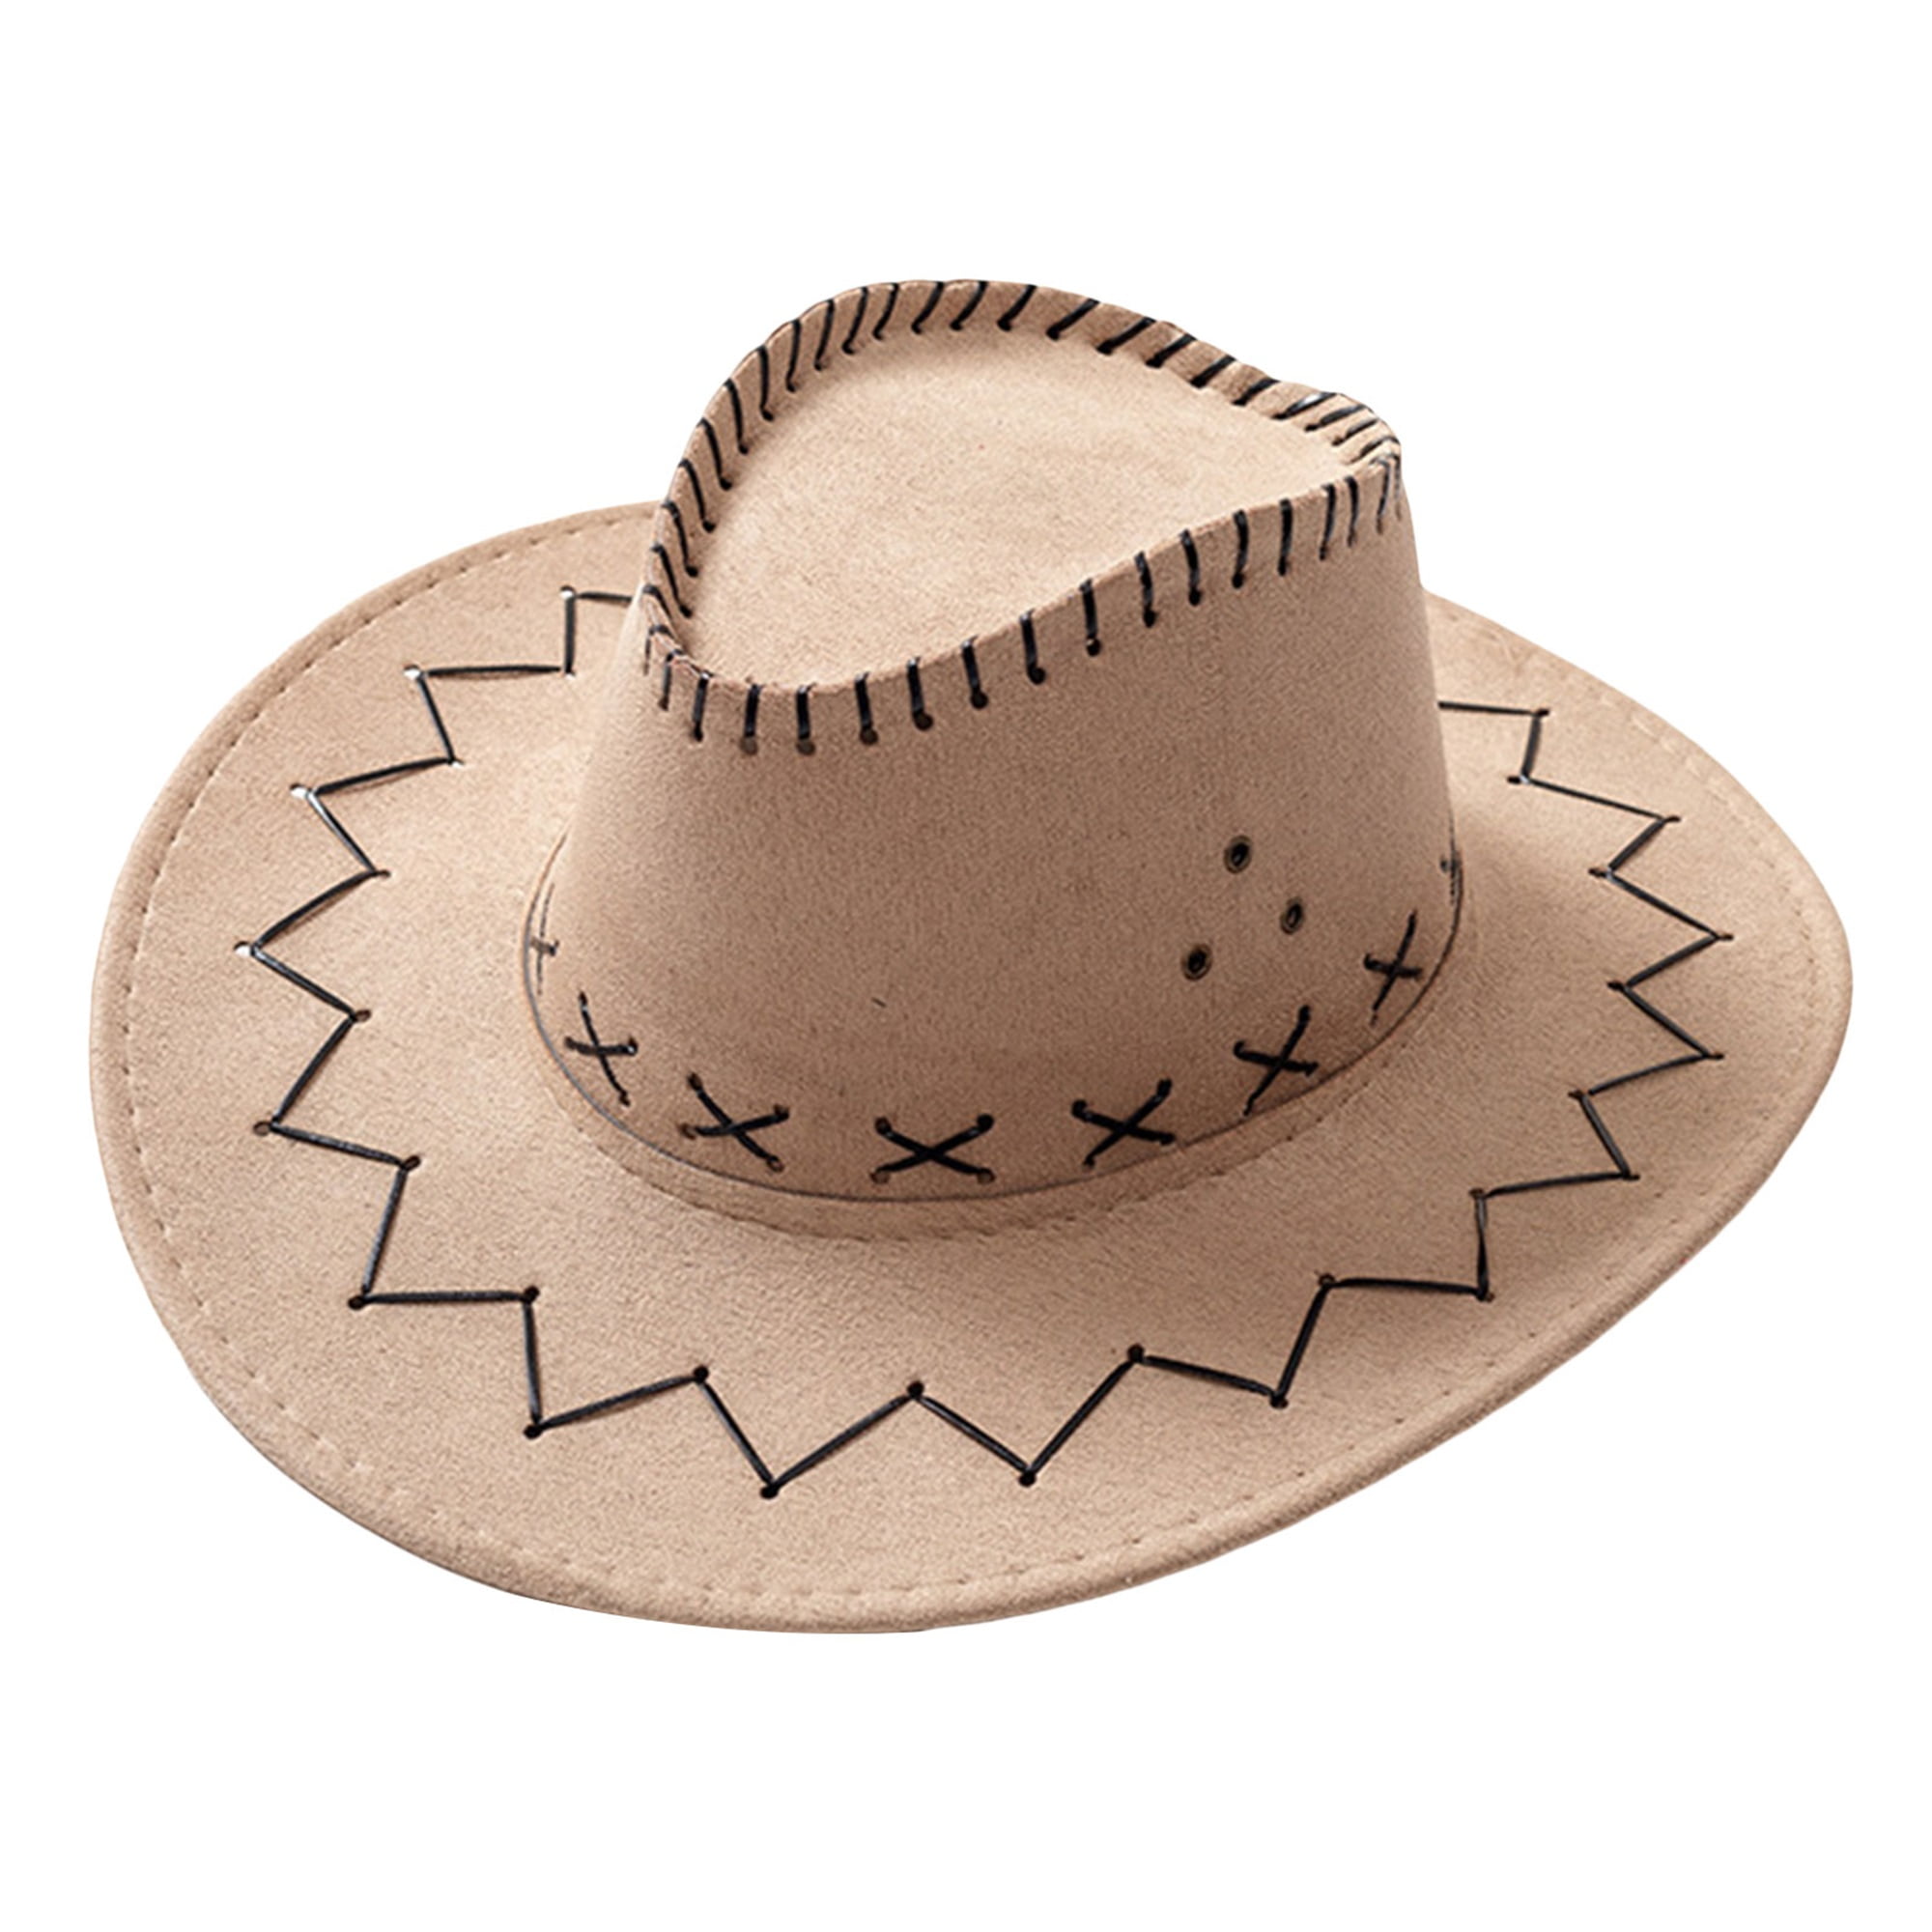 Buy Ultrafun Men Women Cowboy Cowgirl Hat Classic Wide Brim